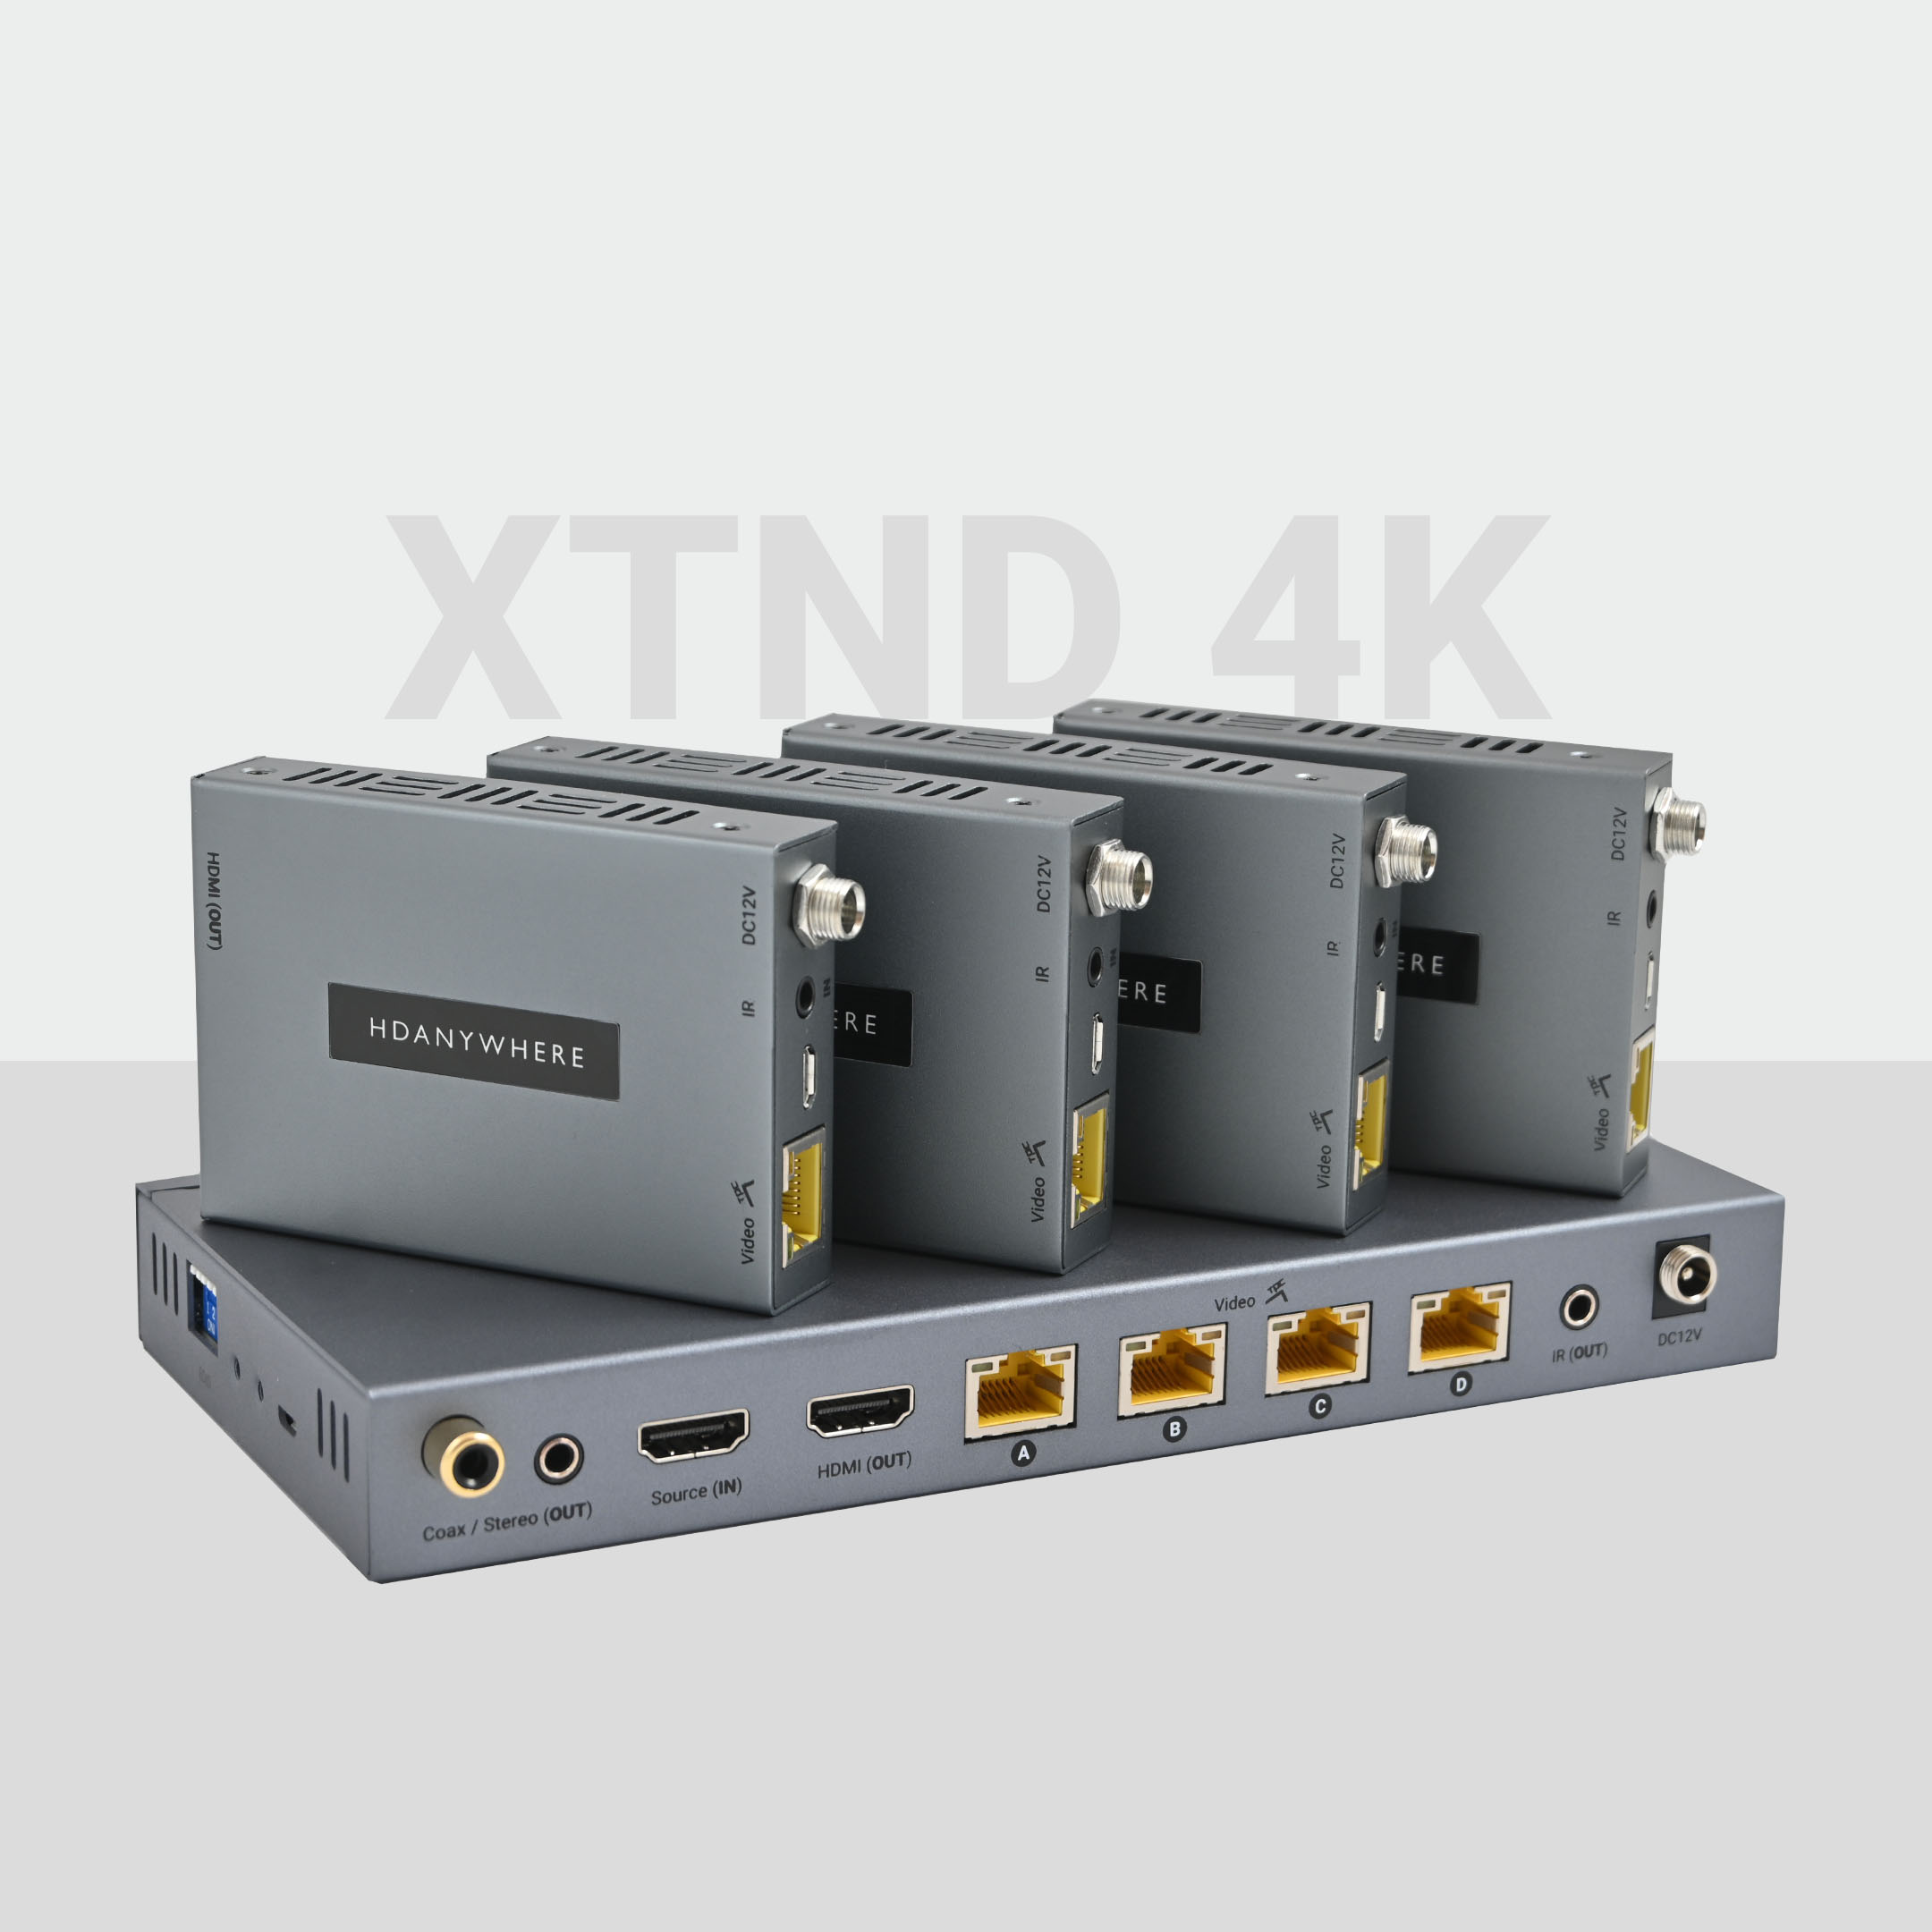 XTND 4K (40) TPC Splitter (1x4+1)